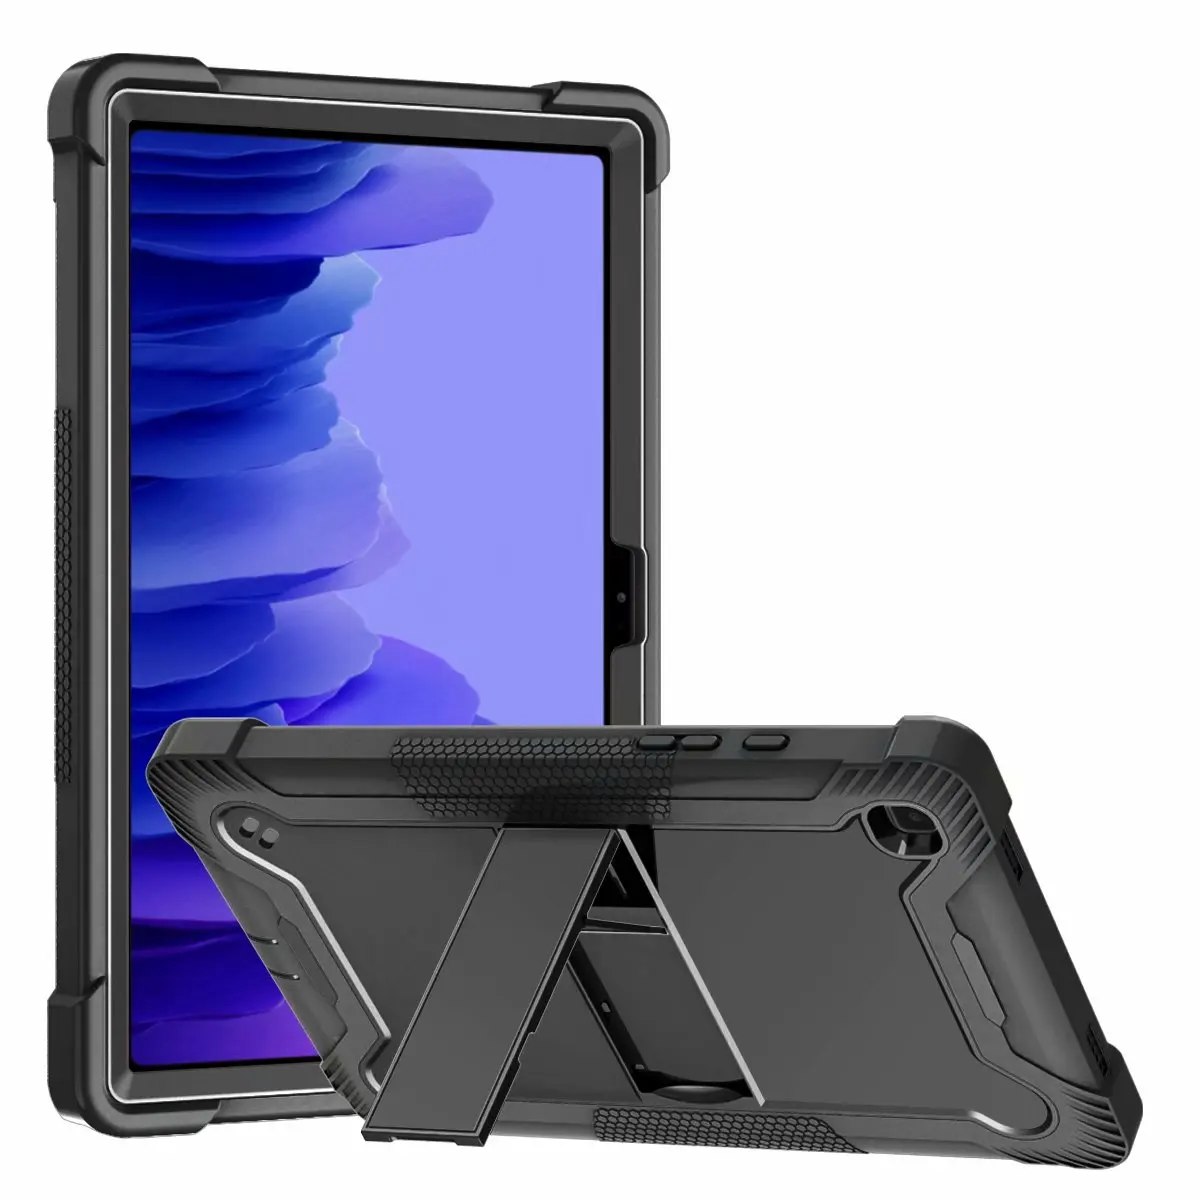 

Чехол для Samsung GALAXY Tab A7 10,4 2020 T500 T505, противоударный чехол-подставка из ТПУ и поликарбоната для планшета Samsung Galaxy Tab S6 Lite P610 P615